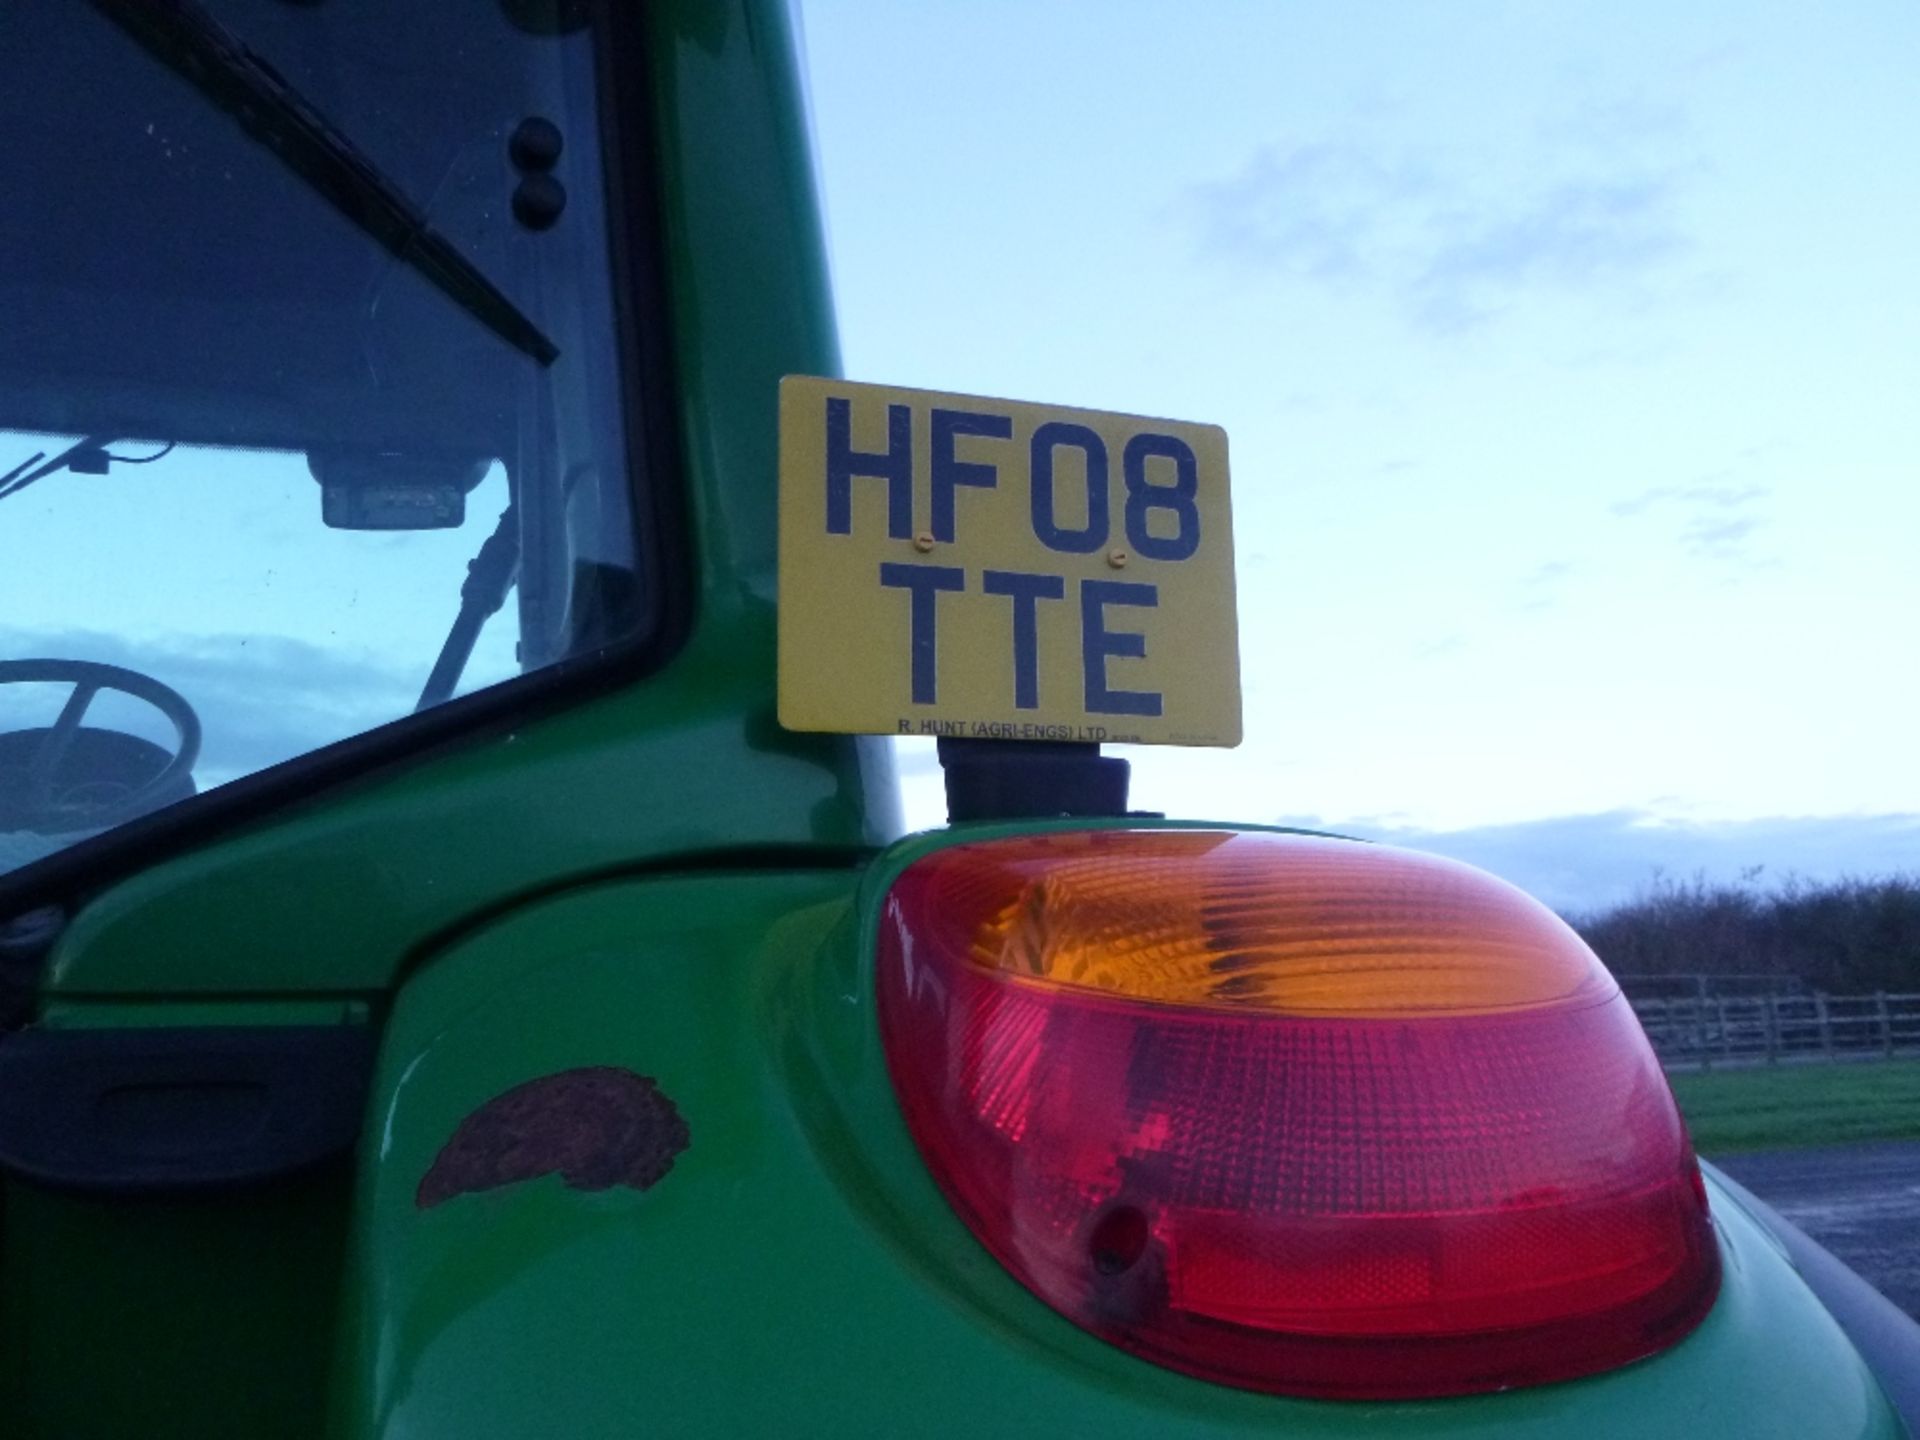 John Deere 6330 TLS - 40K - Auto Quad Tractor
HF08 TTE - Image 9 of 14